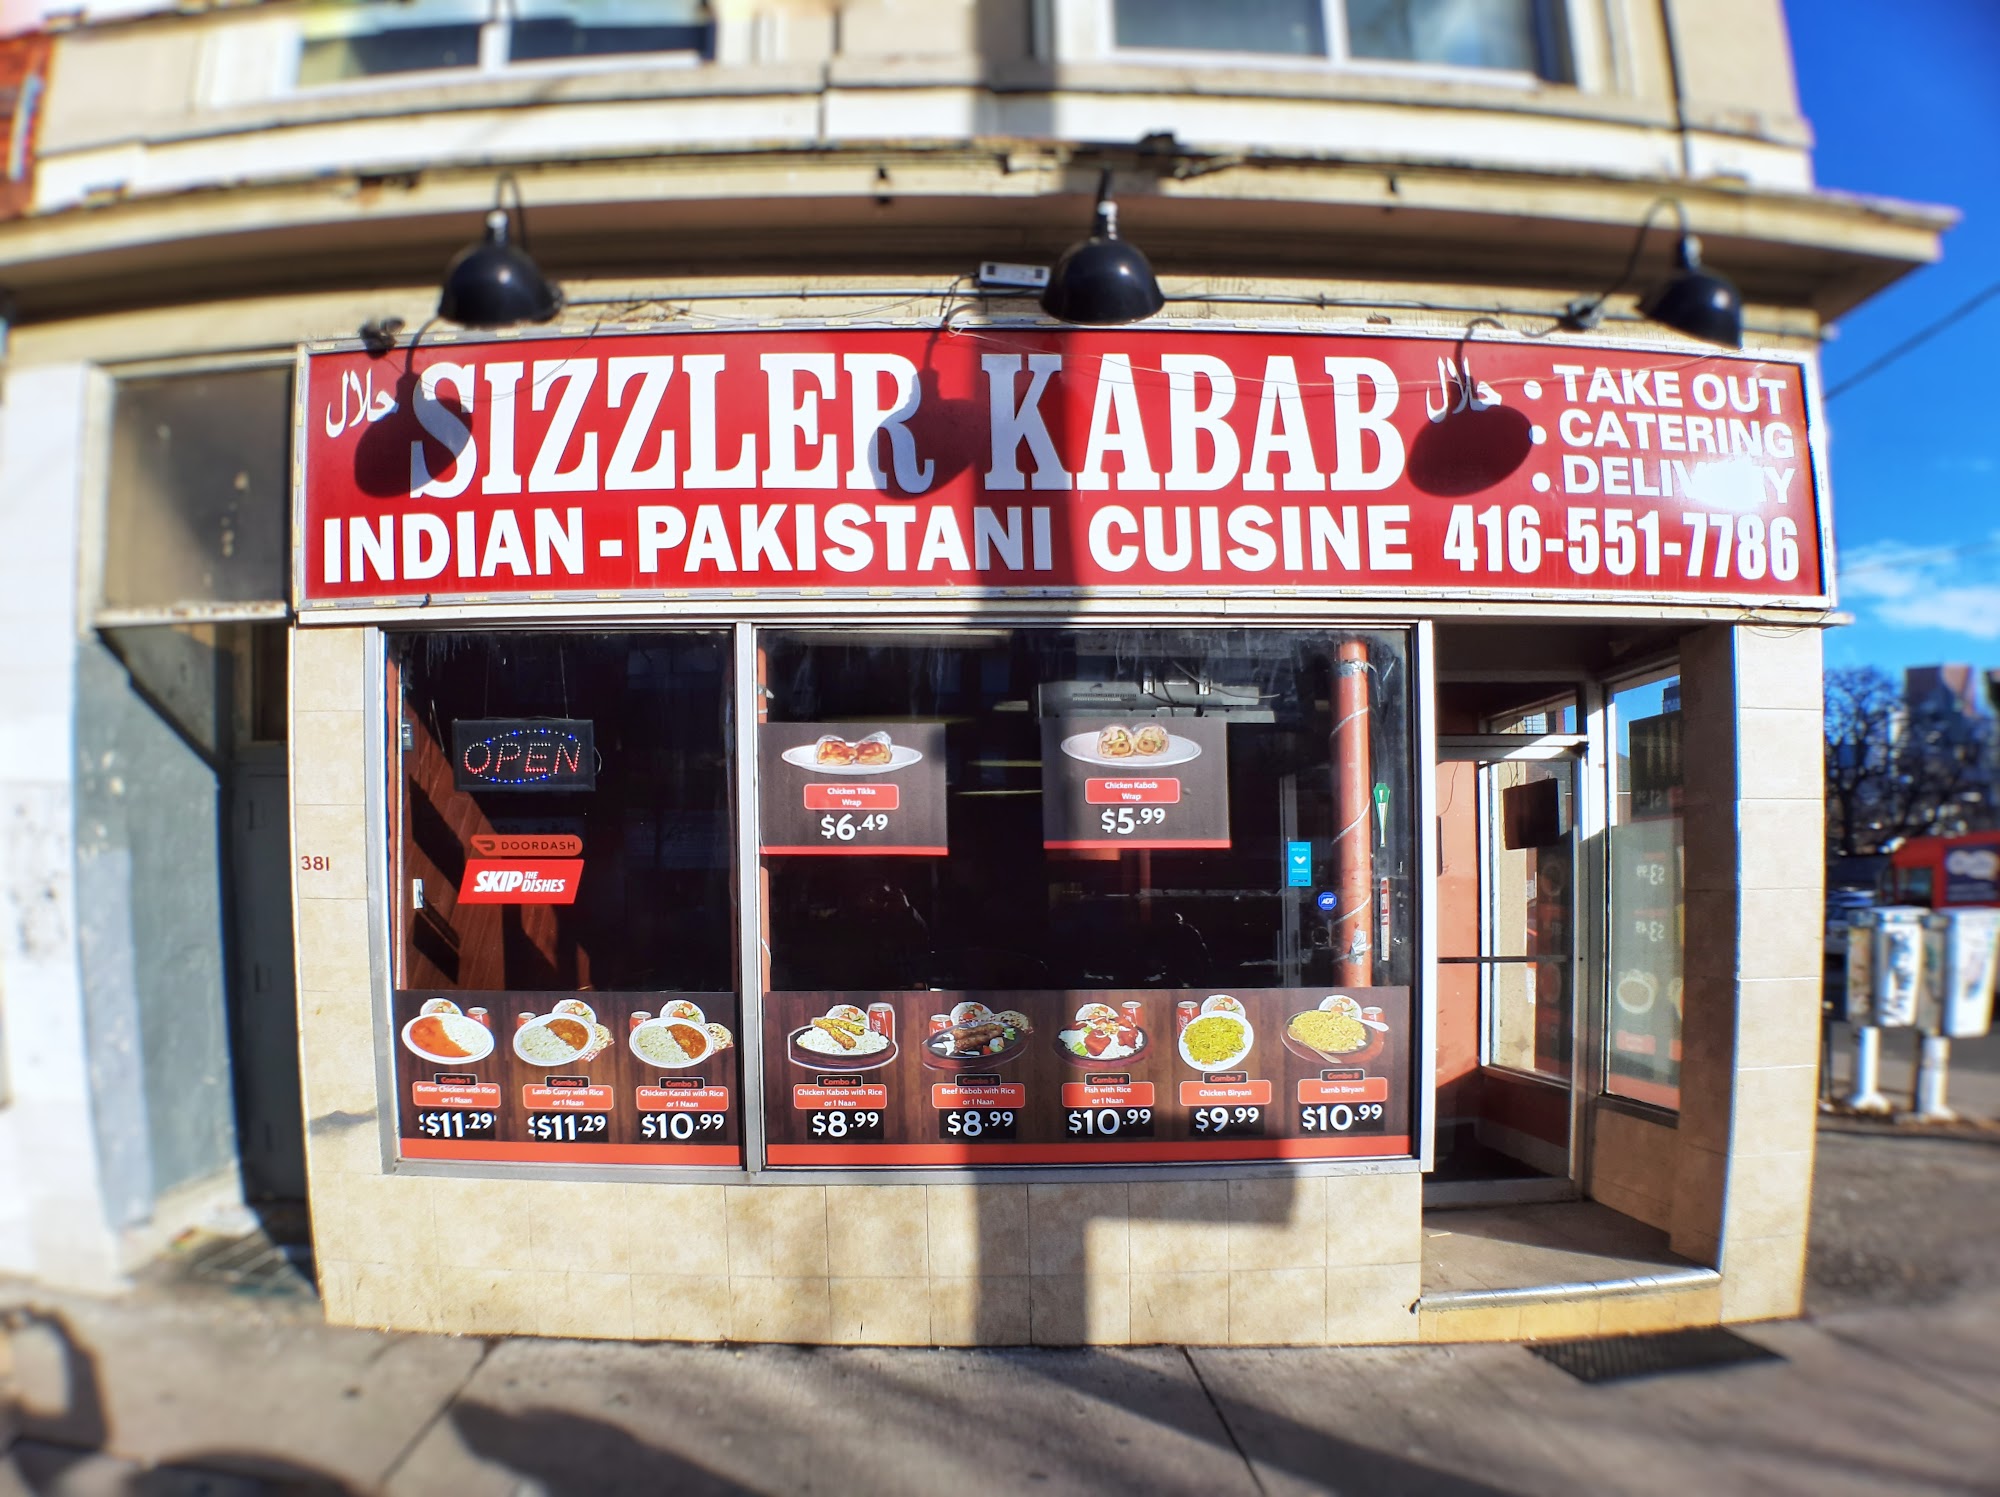 Sizzler Kabab